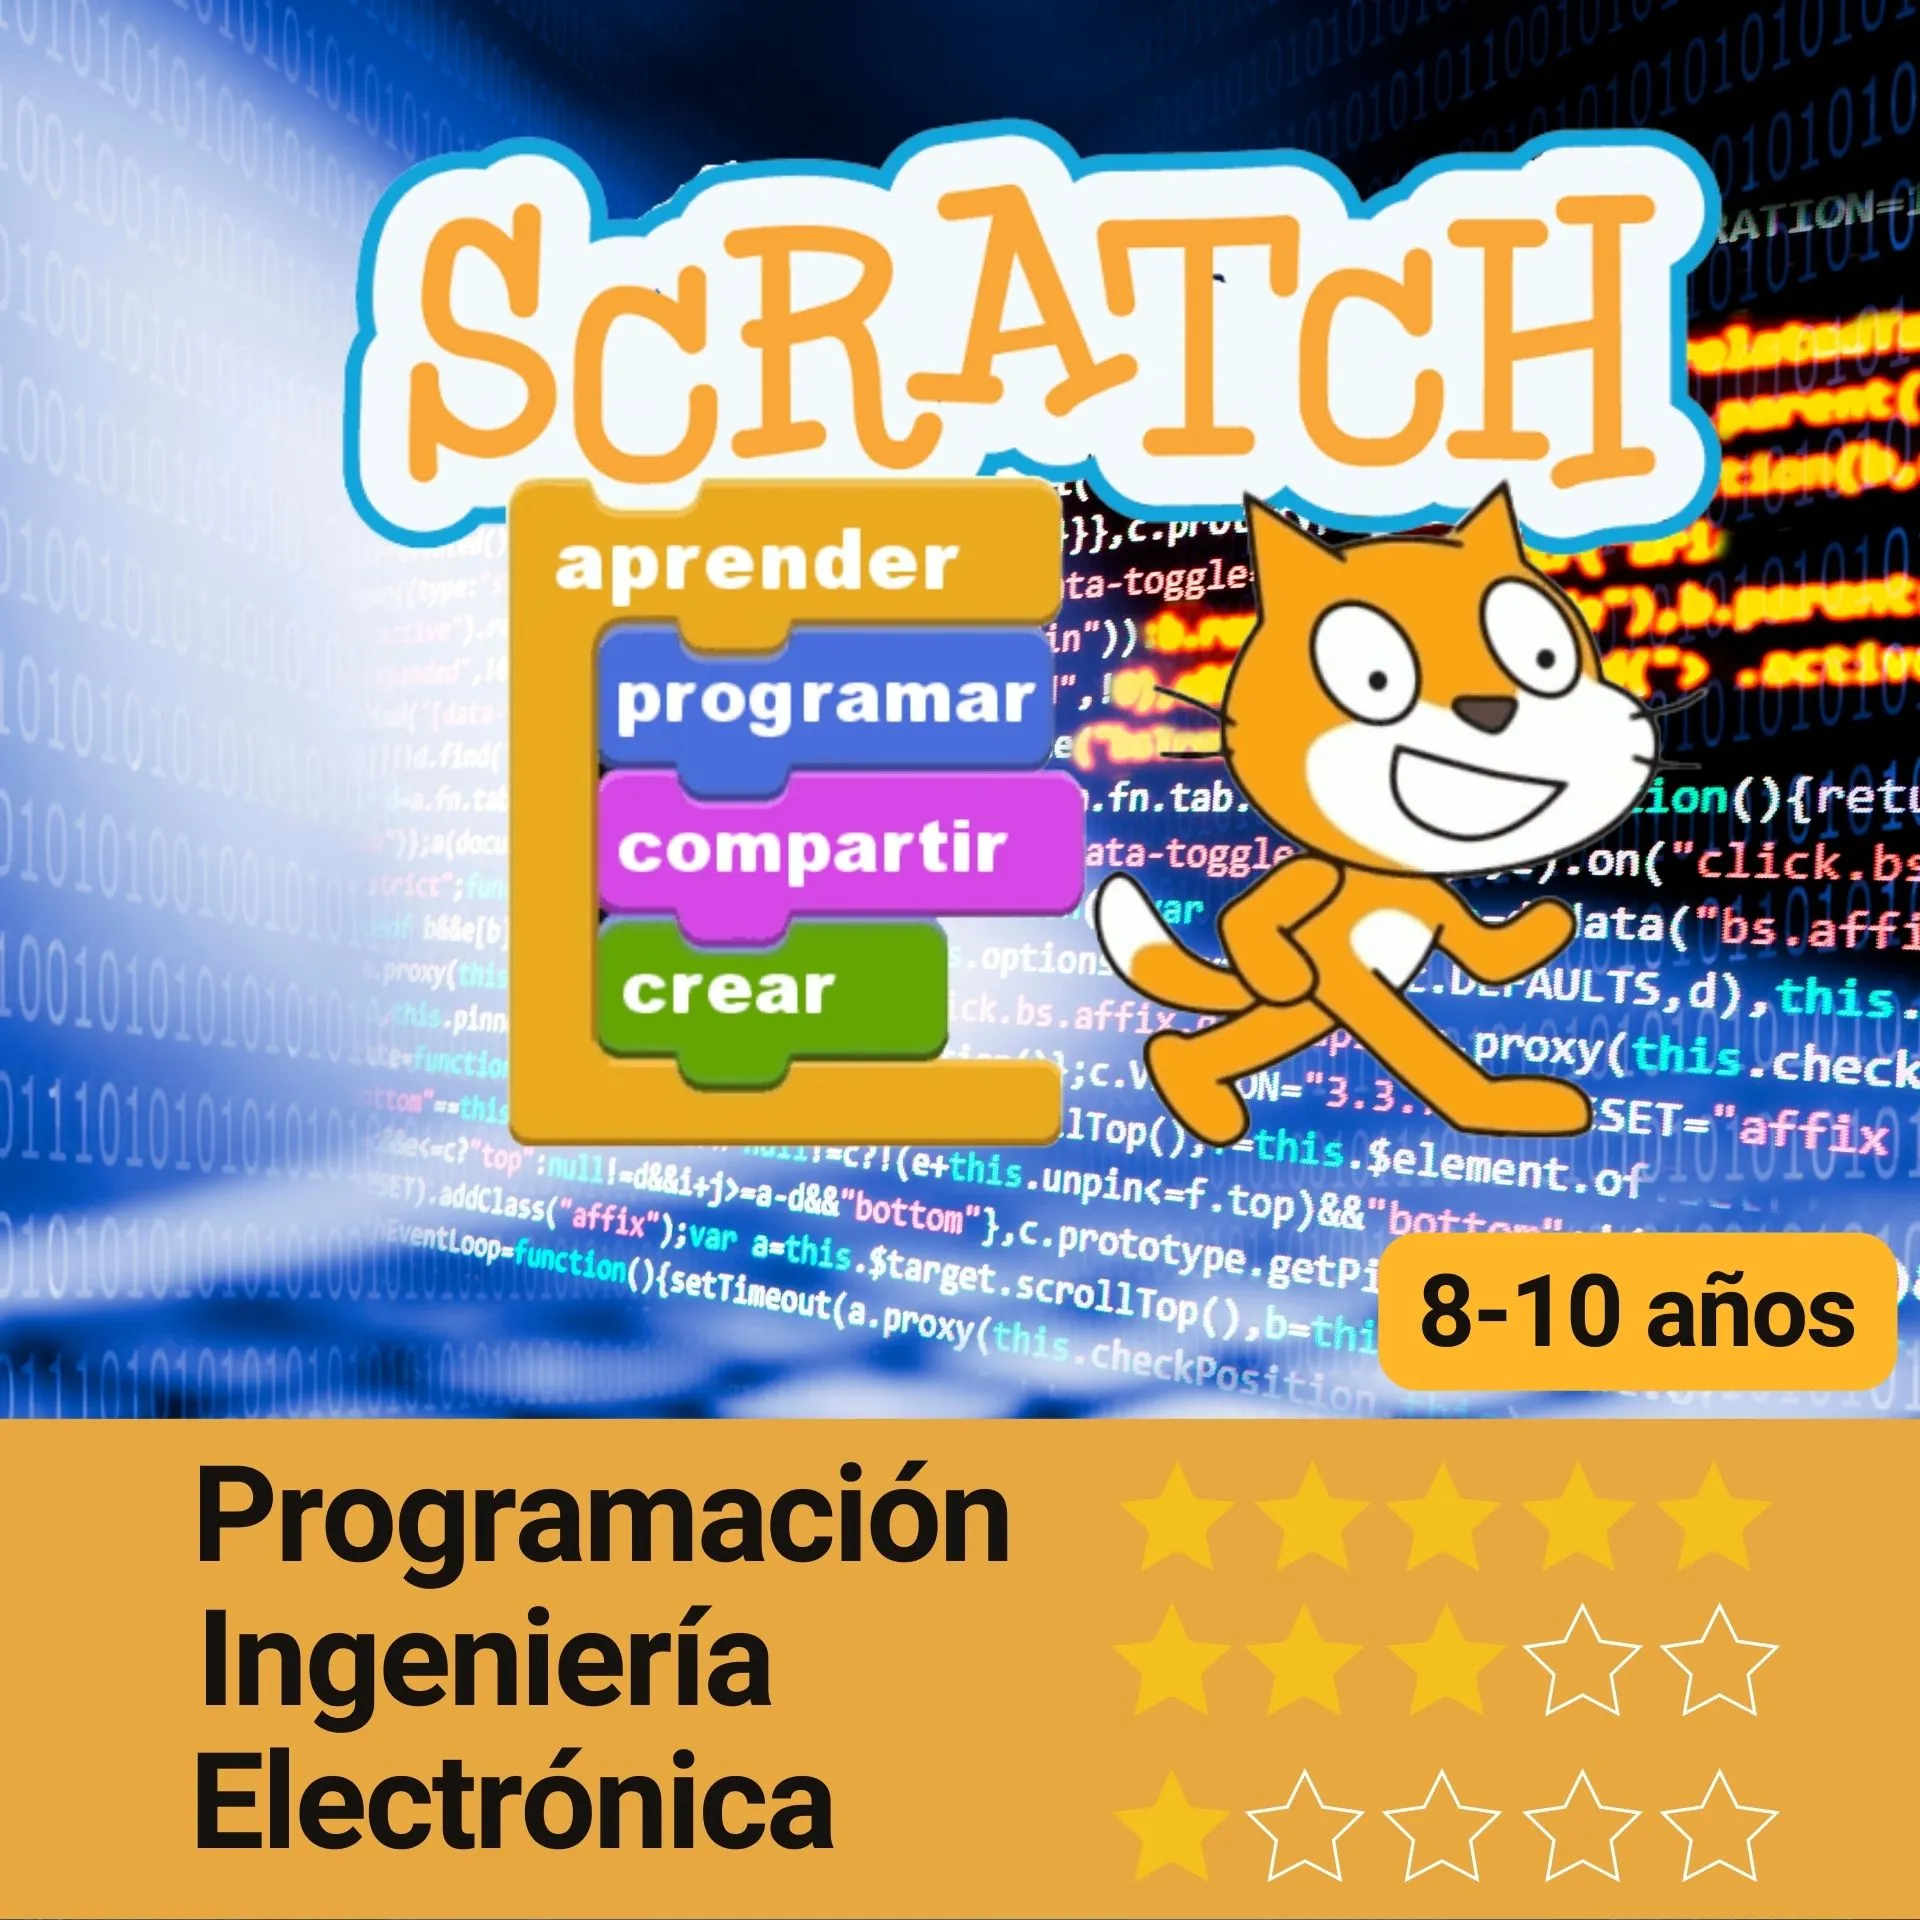 programacion Scratch